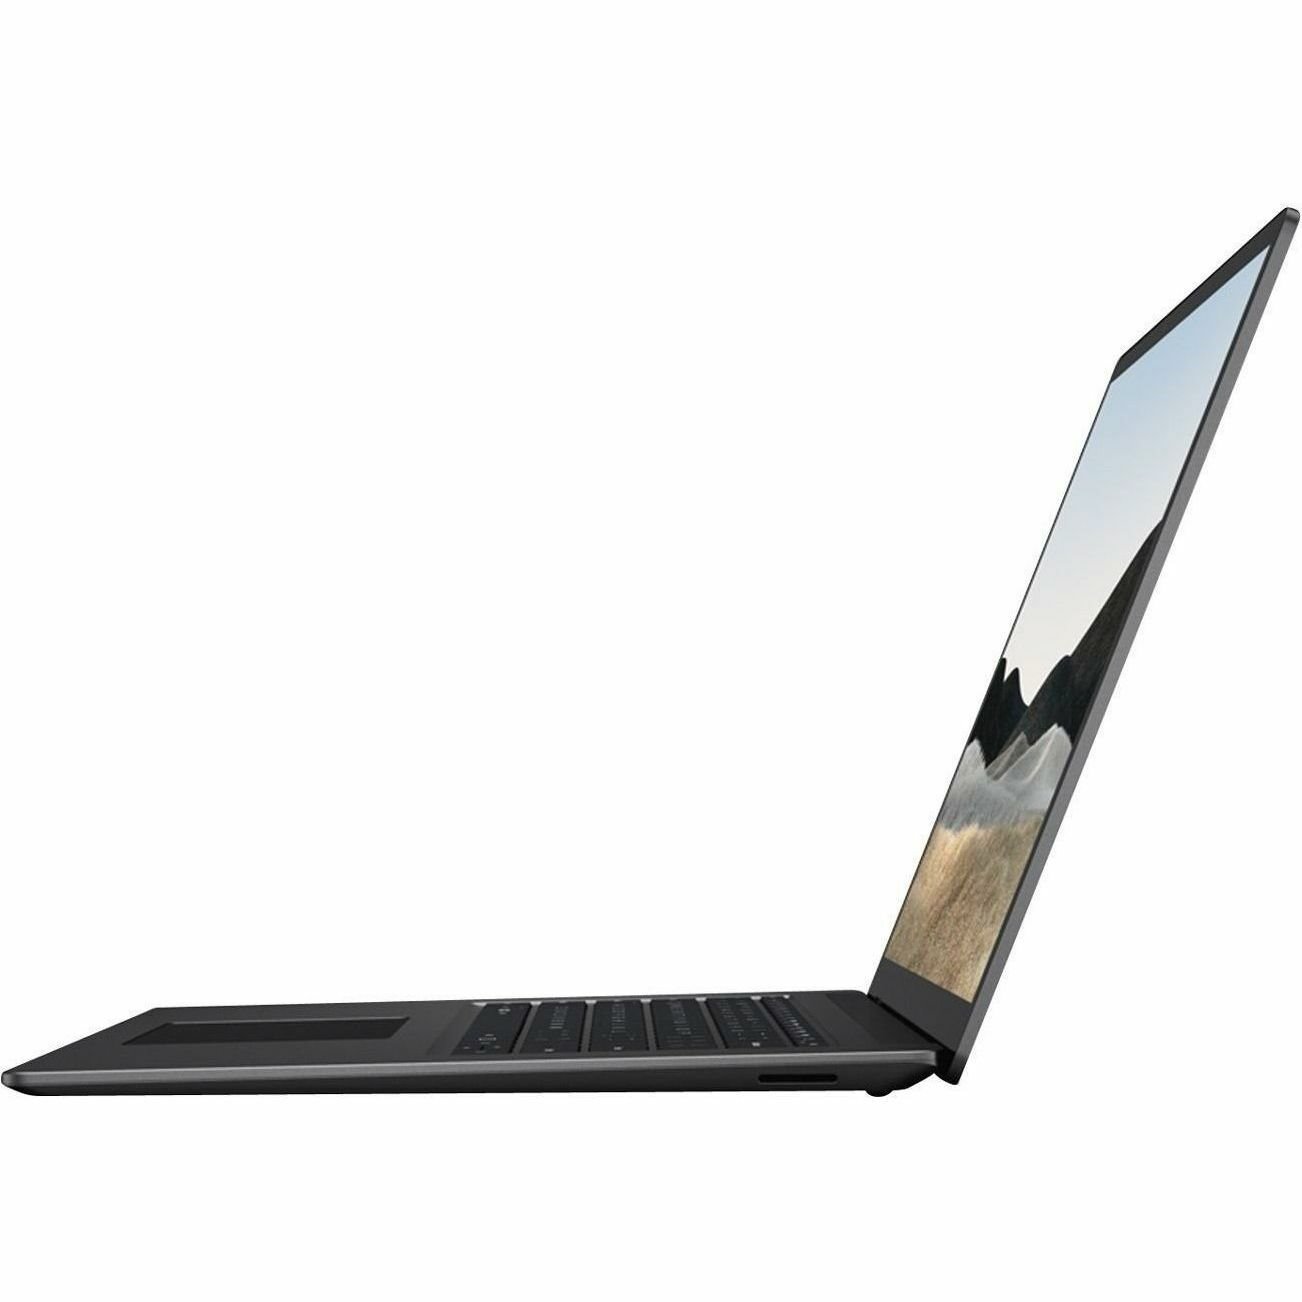 Microsoft Surface Laptop 4 13.5" Touchscreen Notebook - 2256 x 1504 - AMD Ryzen 5 4680U Quad-core (4 Core) 2.10 GHz - 16 GB Total RAM - 256 GB SSD - Matte Black